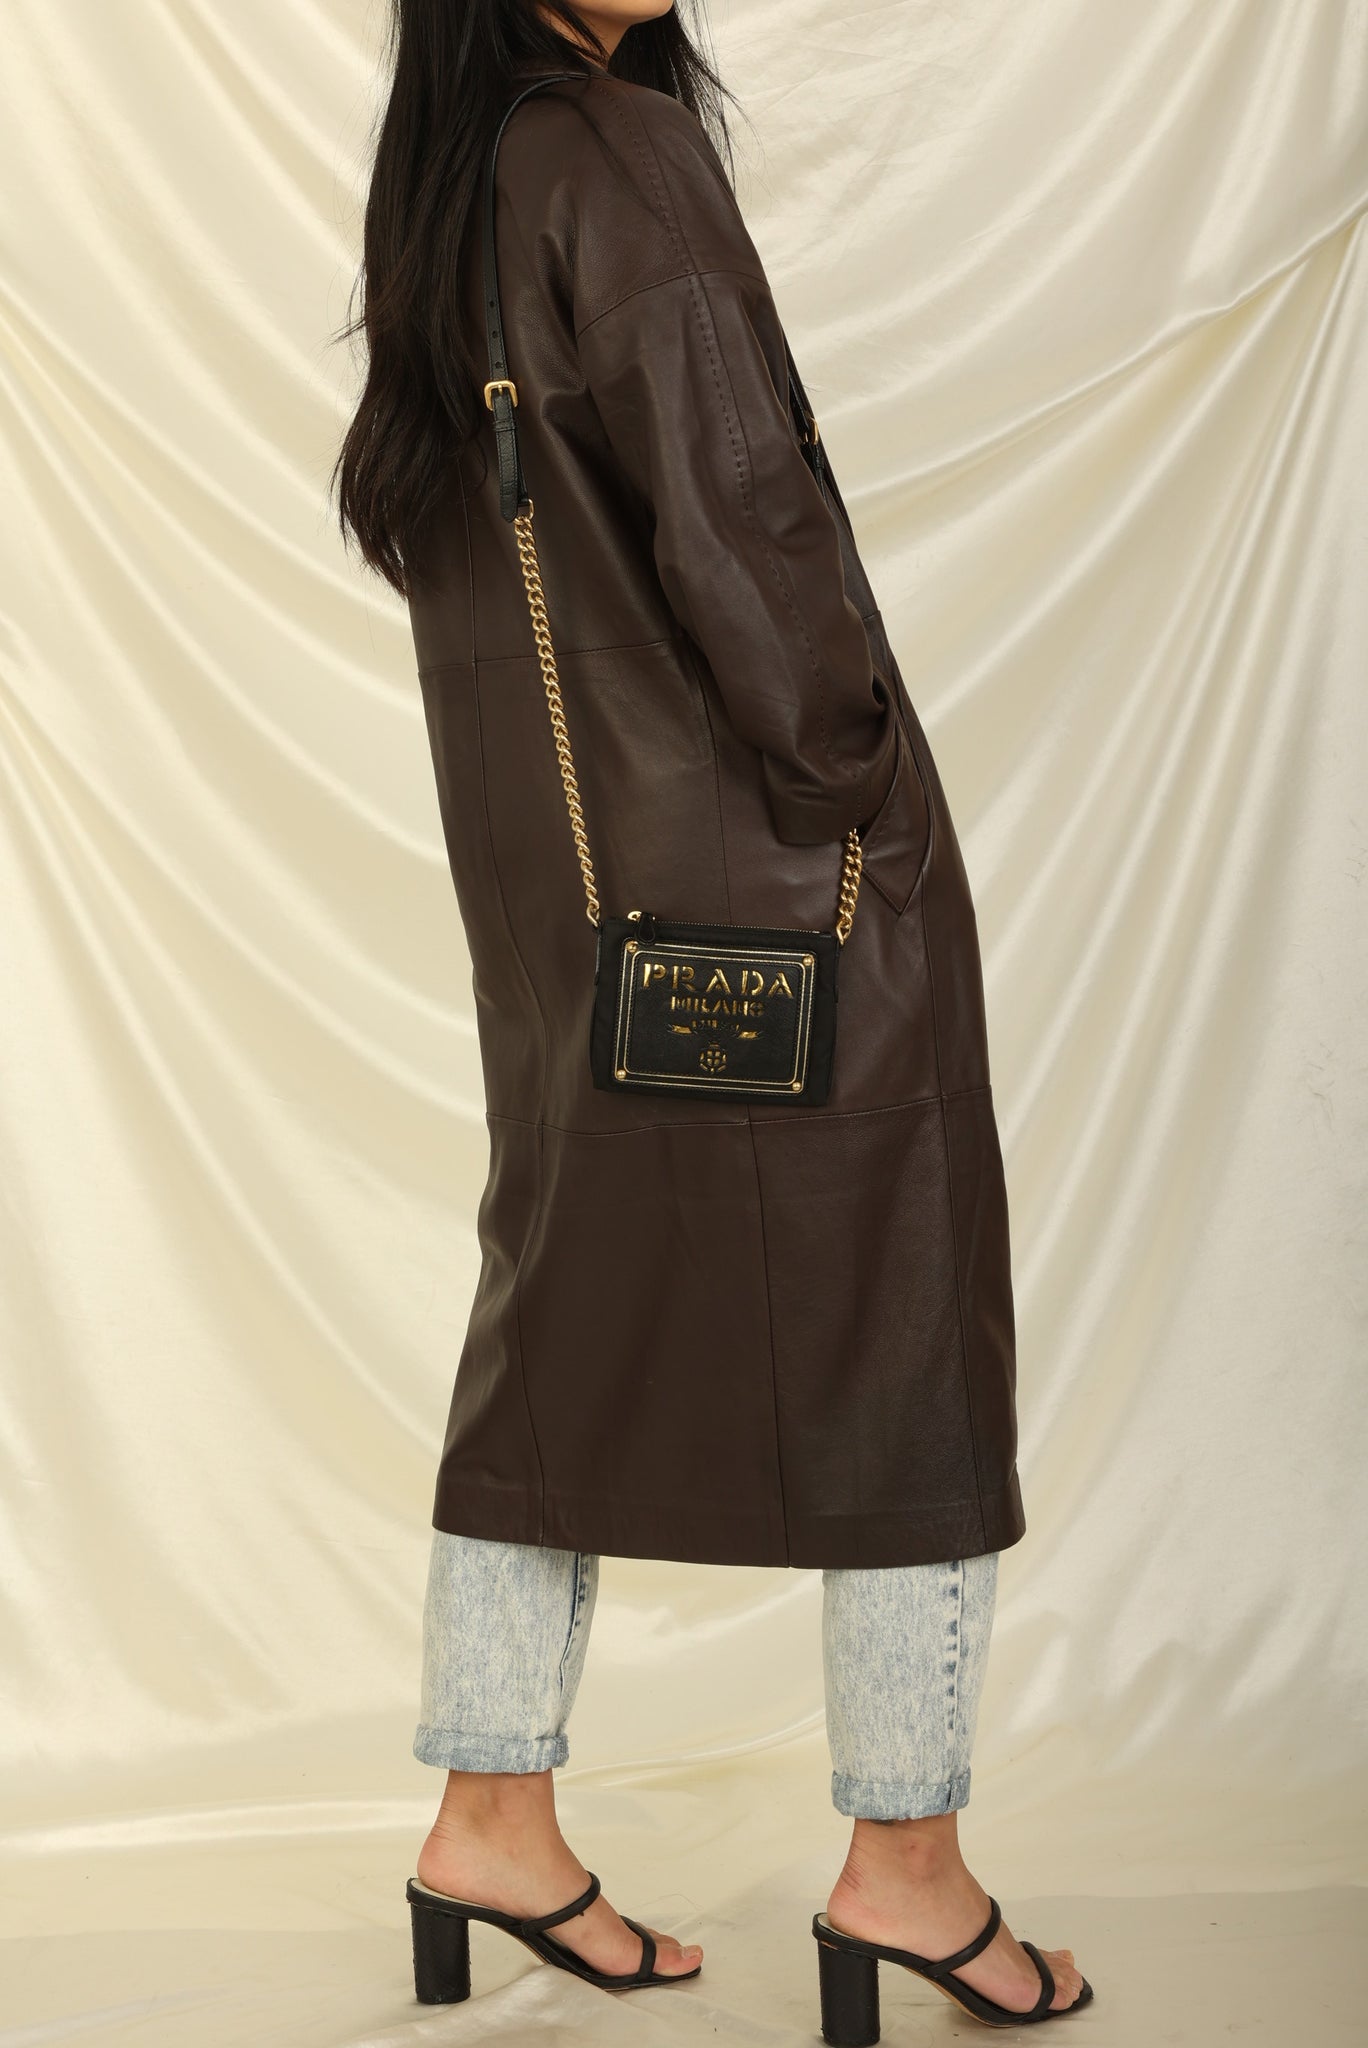 Prada Tessuto Saffiano Crossbody Bag *price lowered*